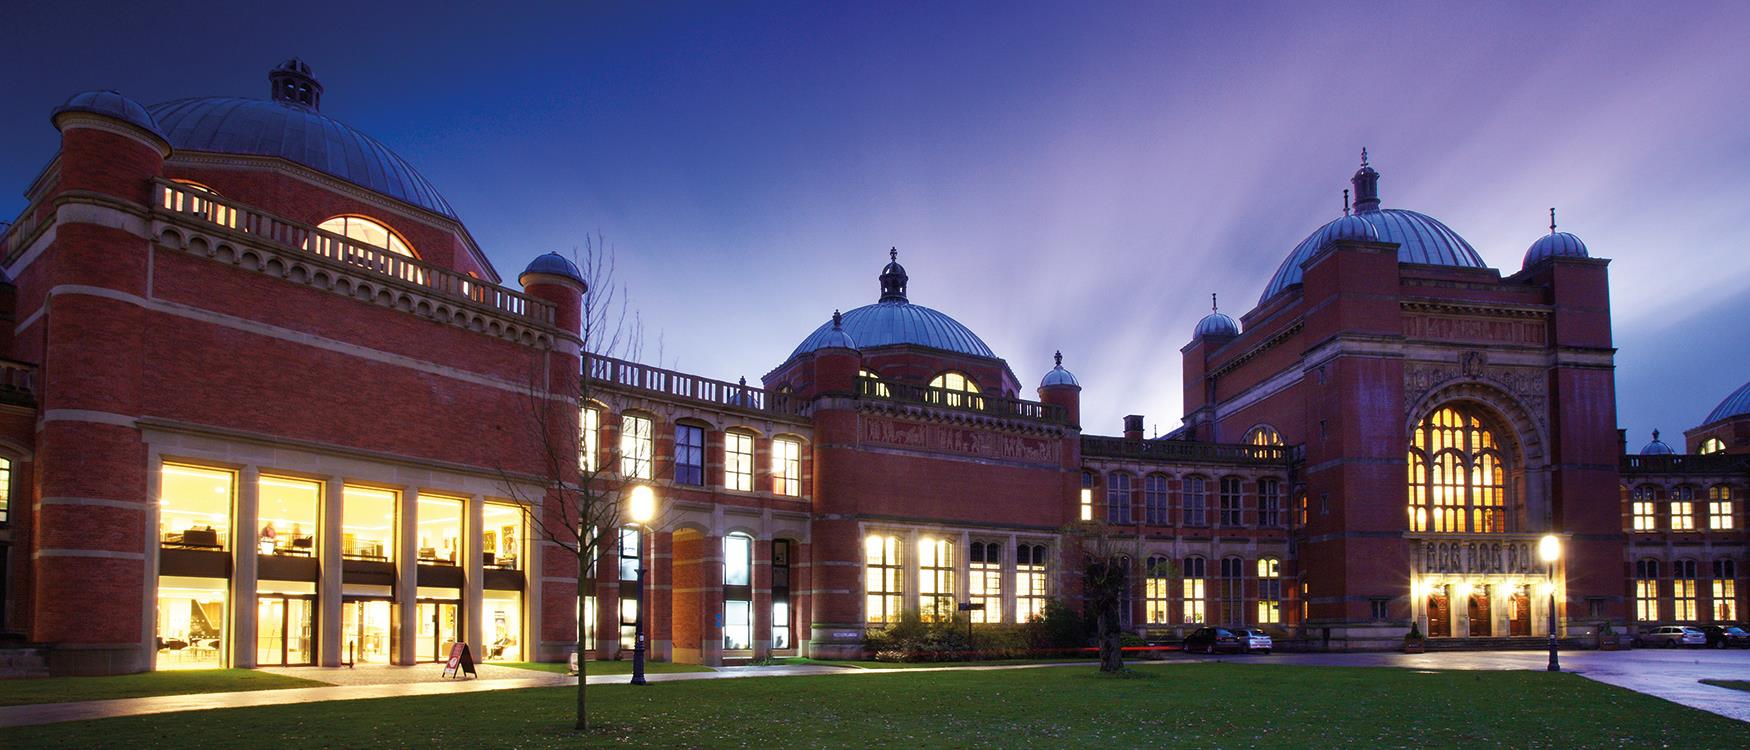 University of Birmingham, 20 - 23 June 2022